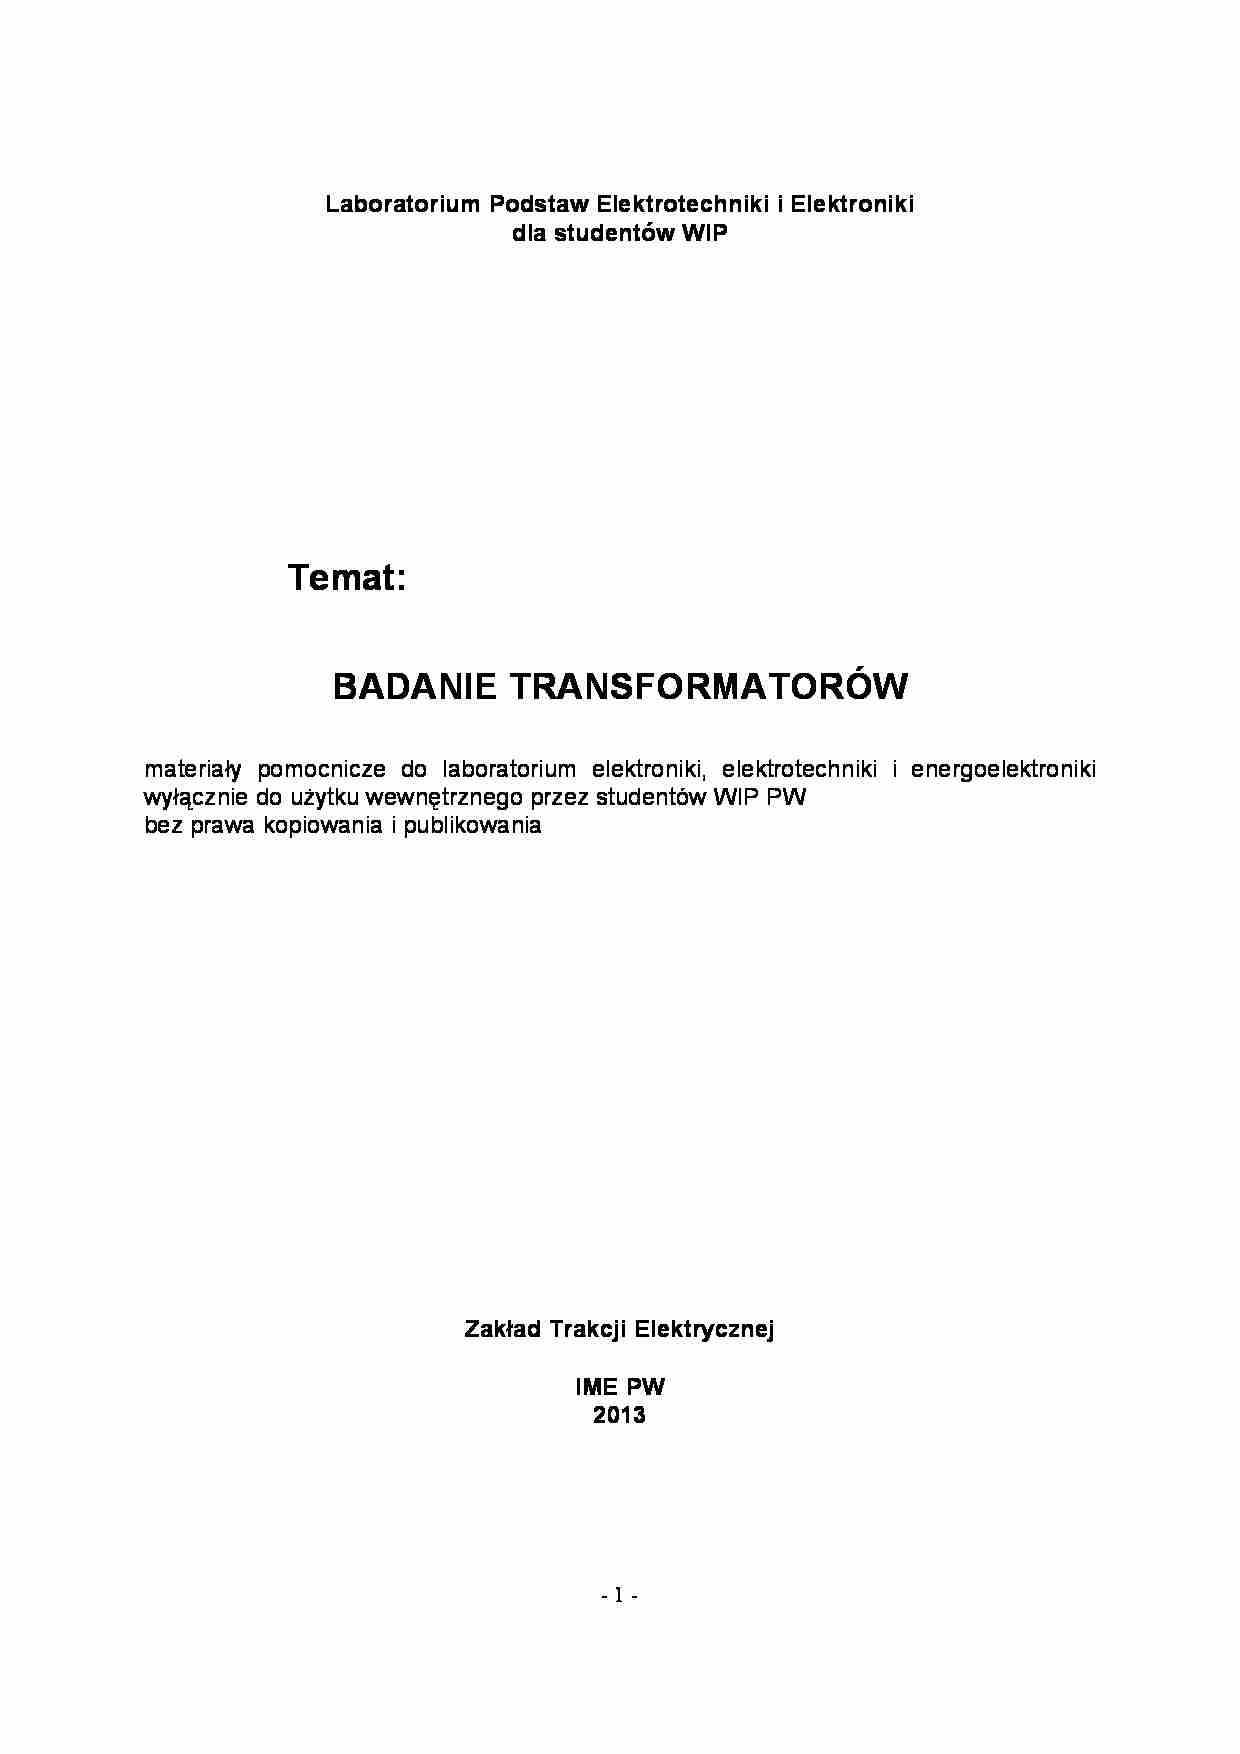 transformator - strona 1